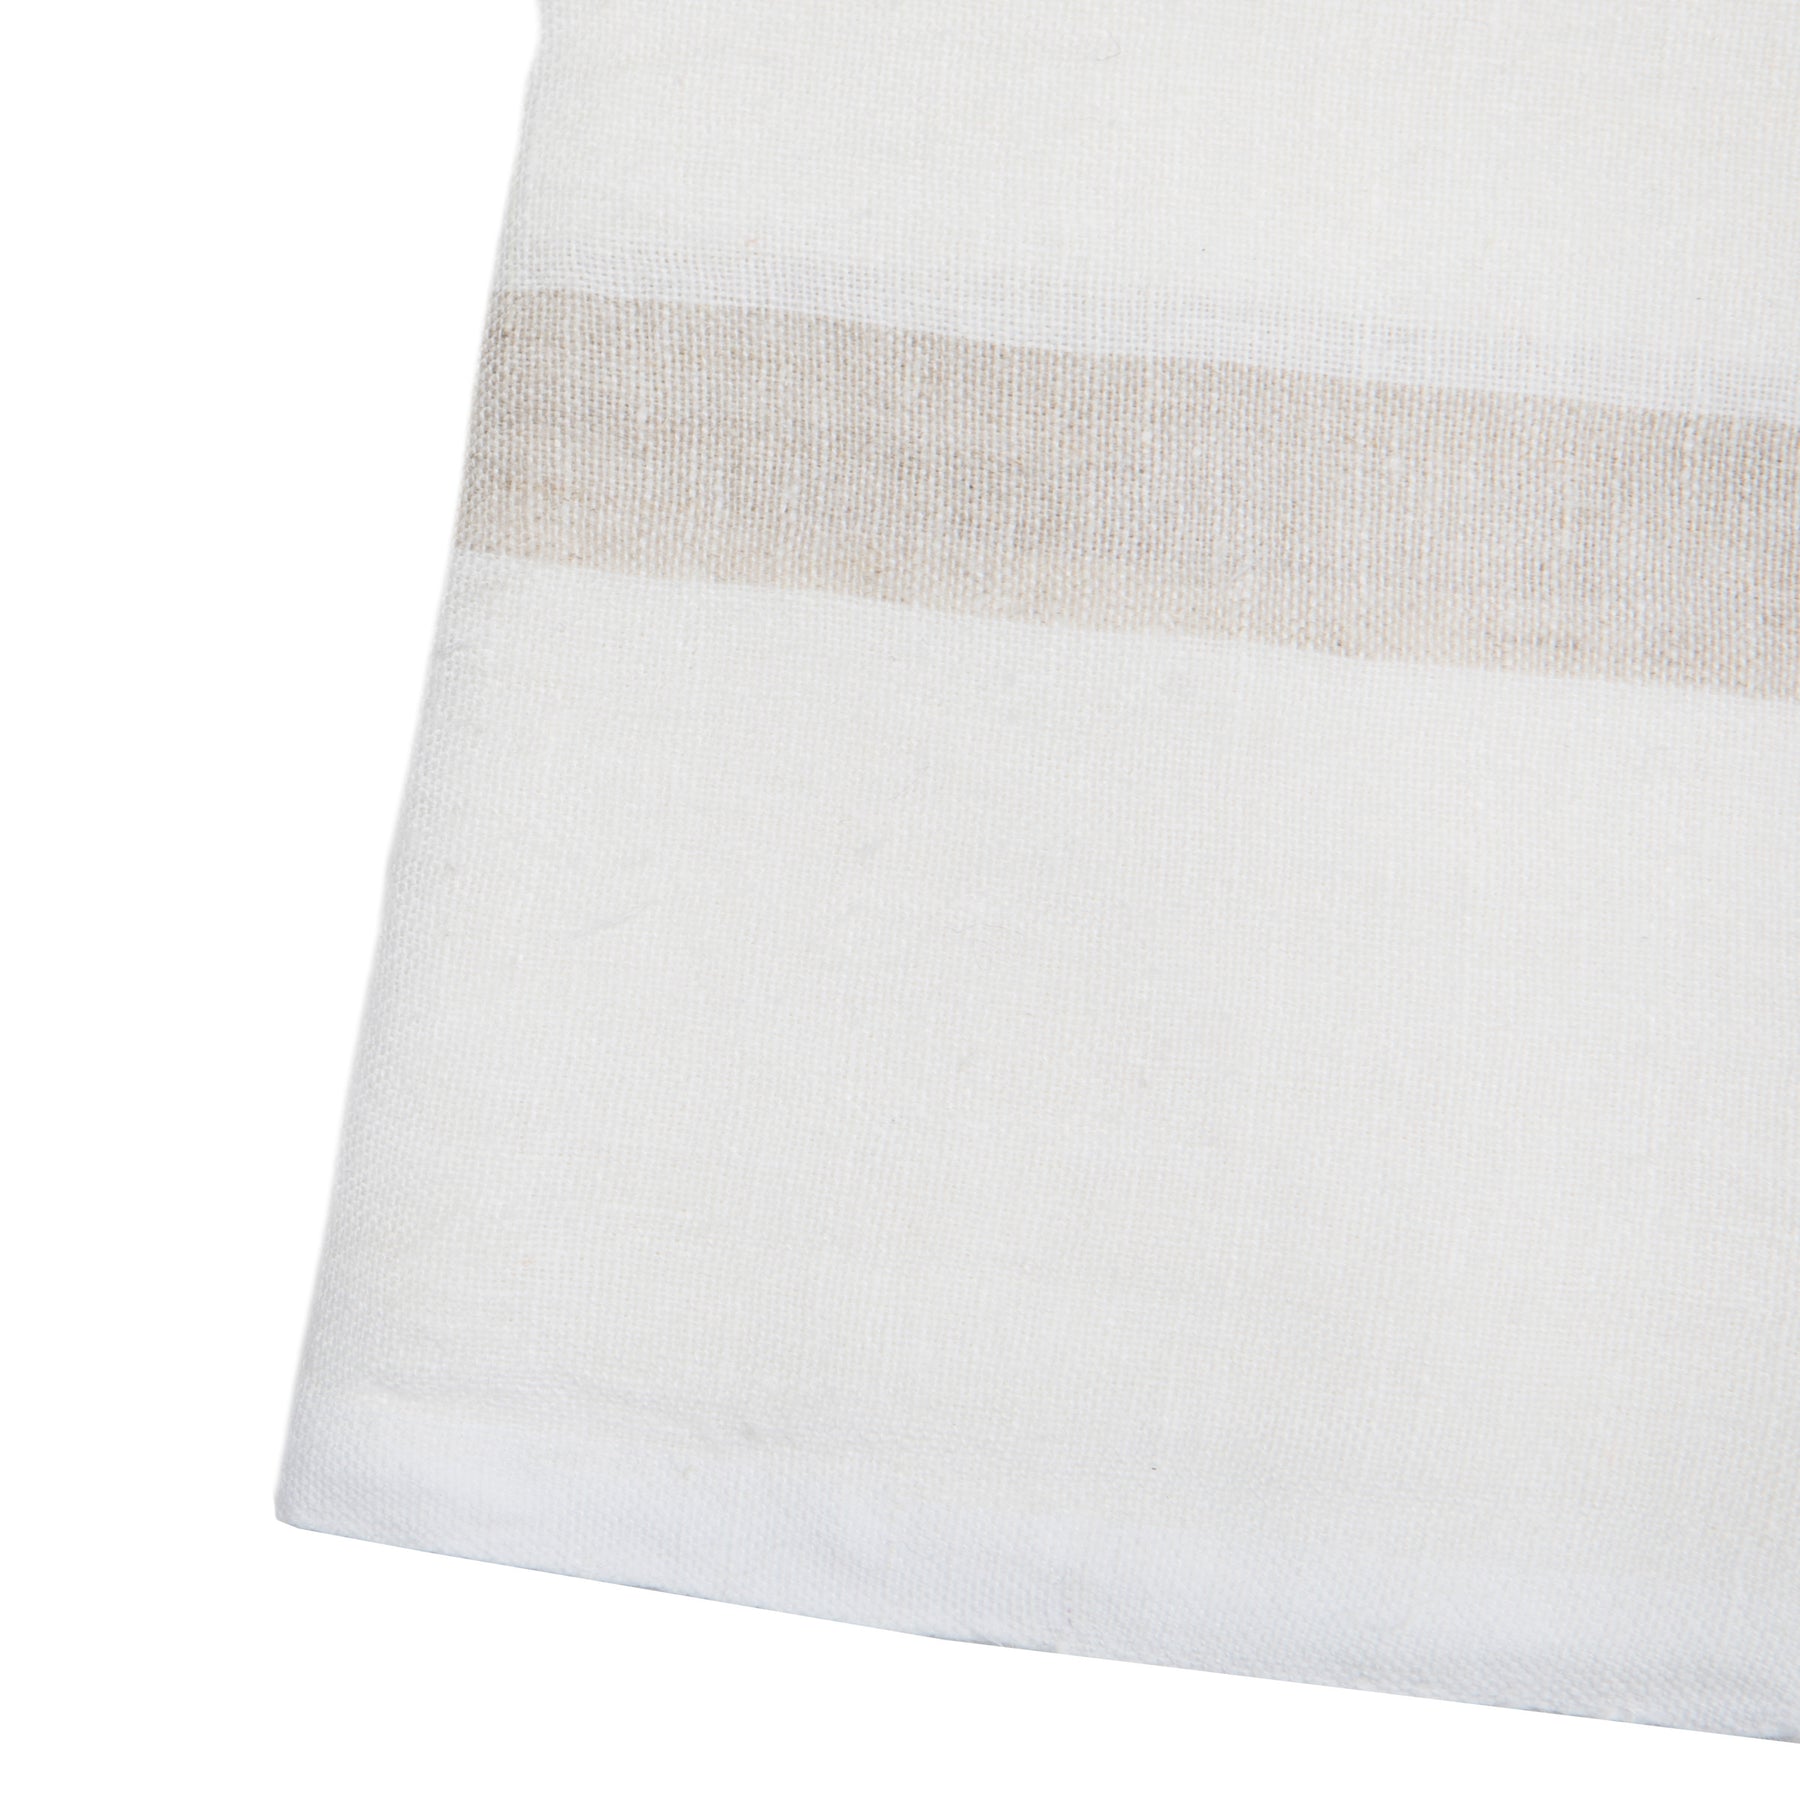 Khadhi Laundered Linen Tea Towels White/Natural Stripe - By Caravan ...